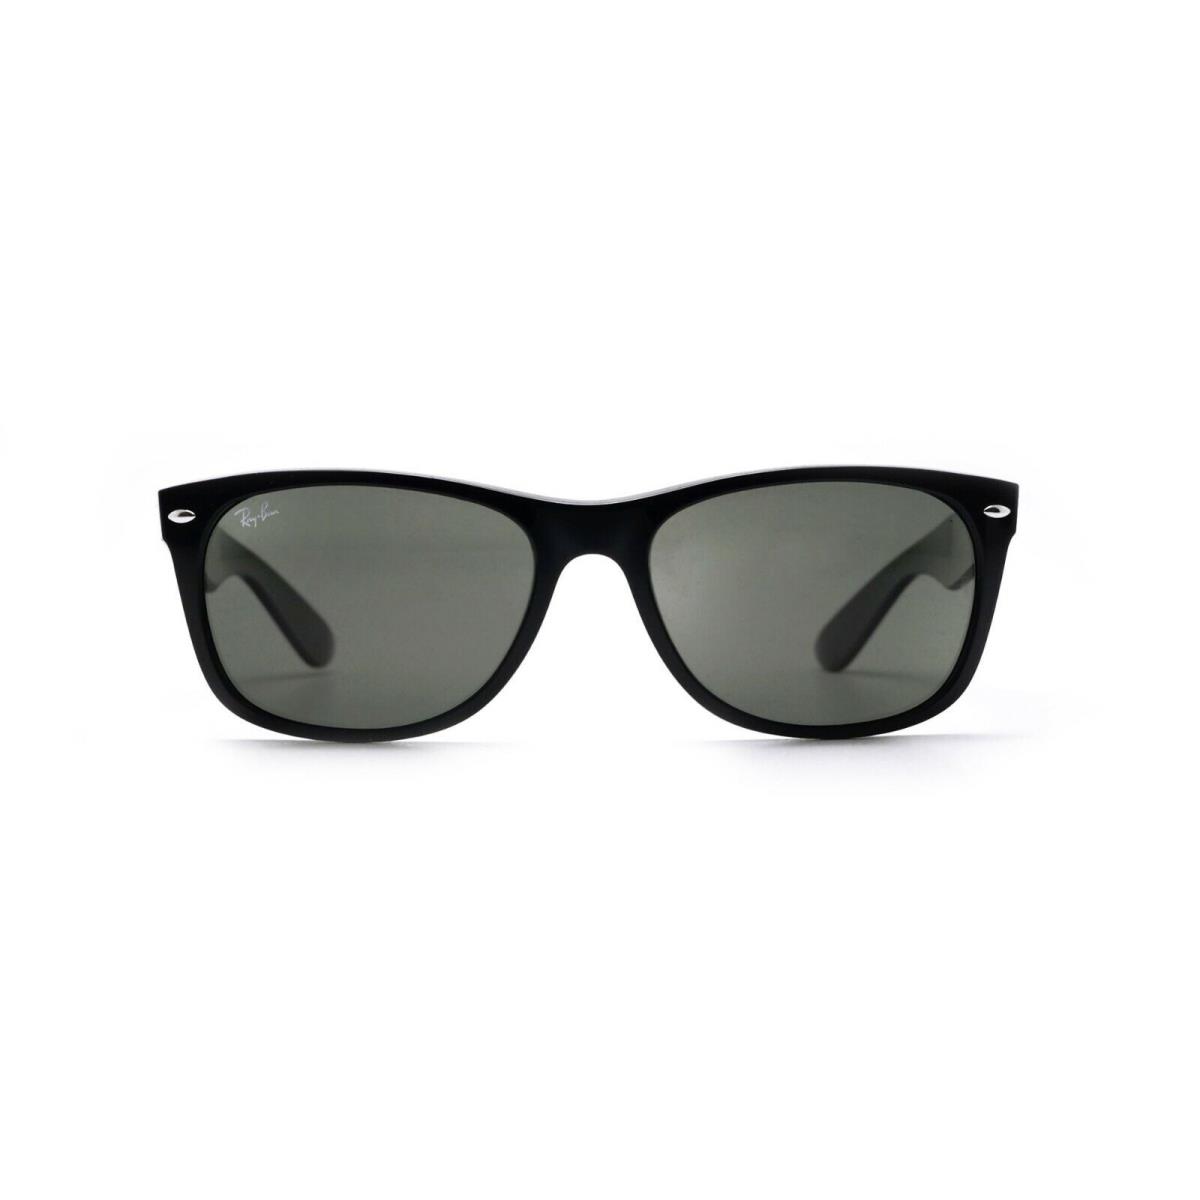 Ray-ban Wayfarer Black Sunglasses RB2132 901-52 / RB2132901-52 - Black Frame